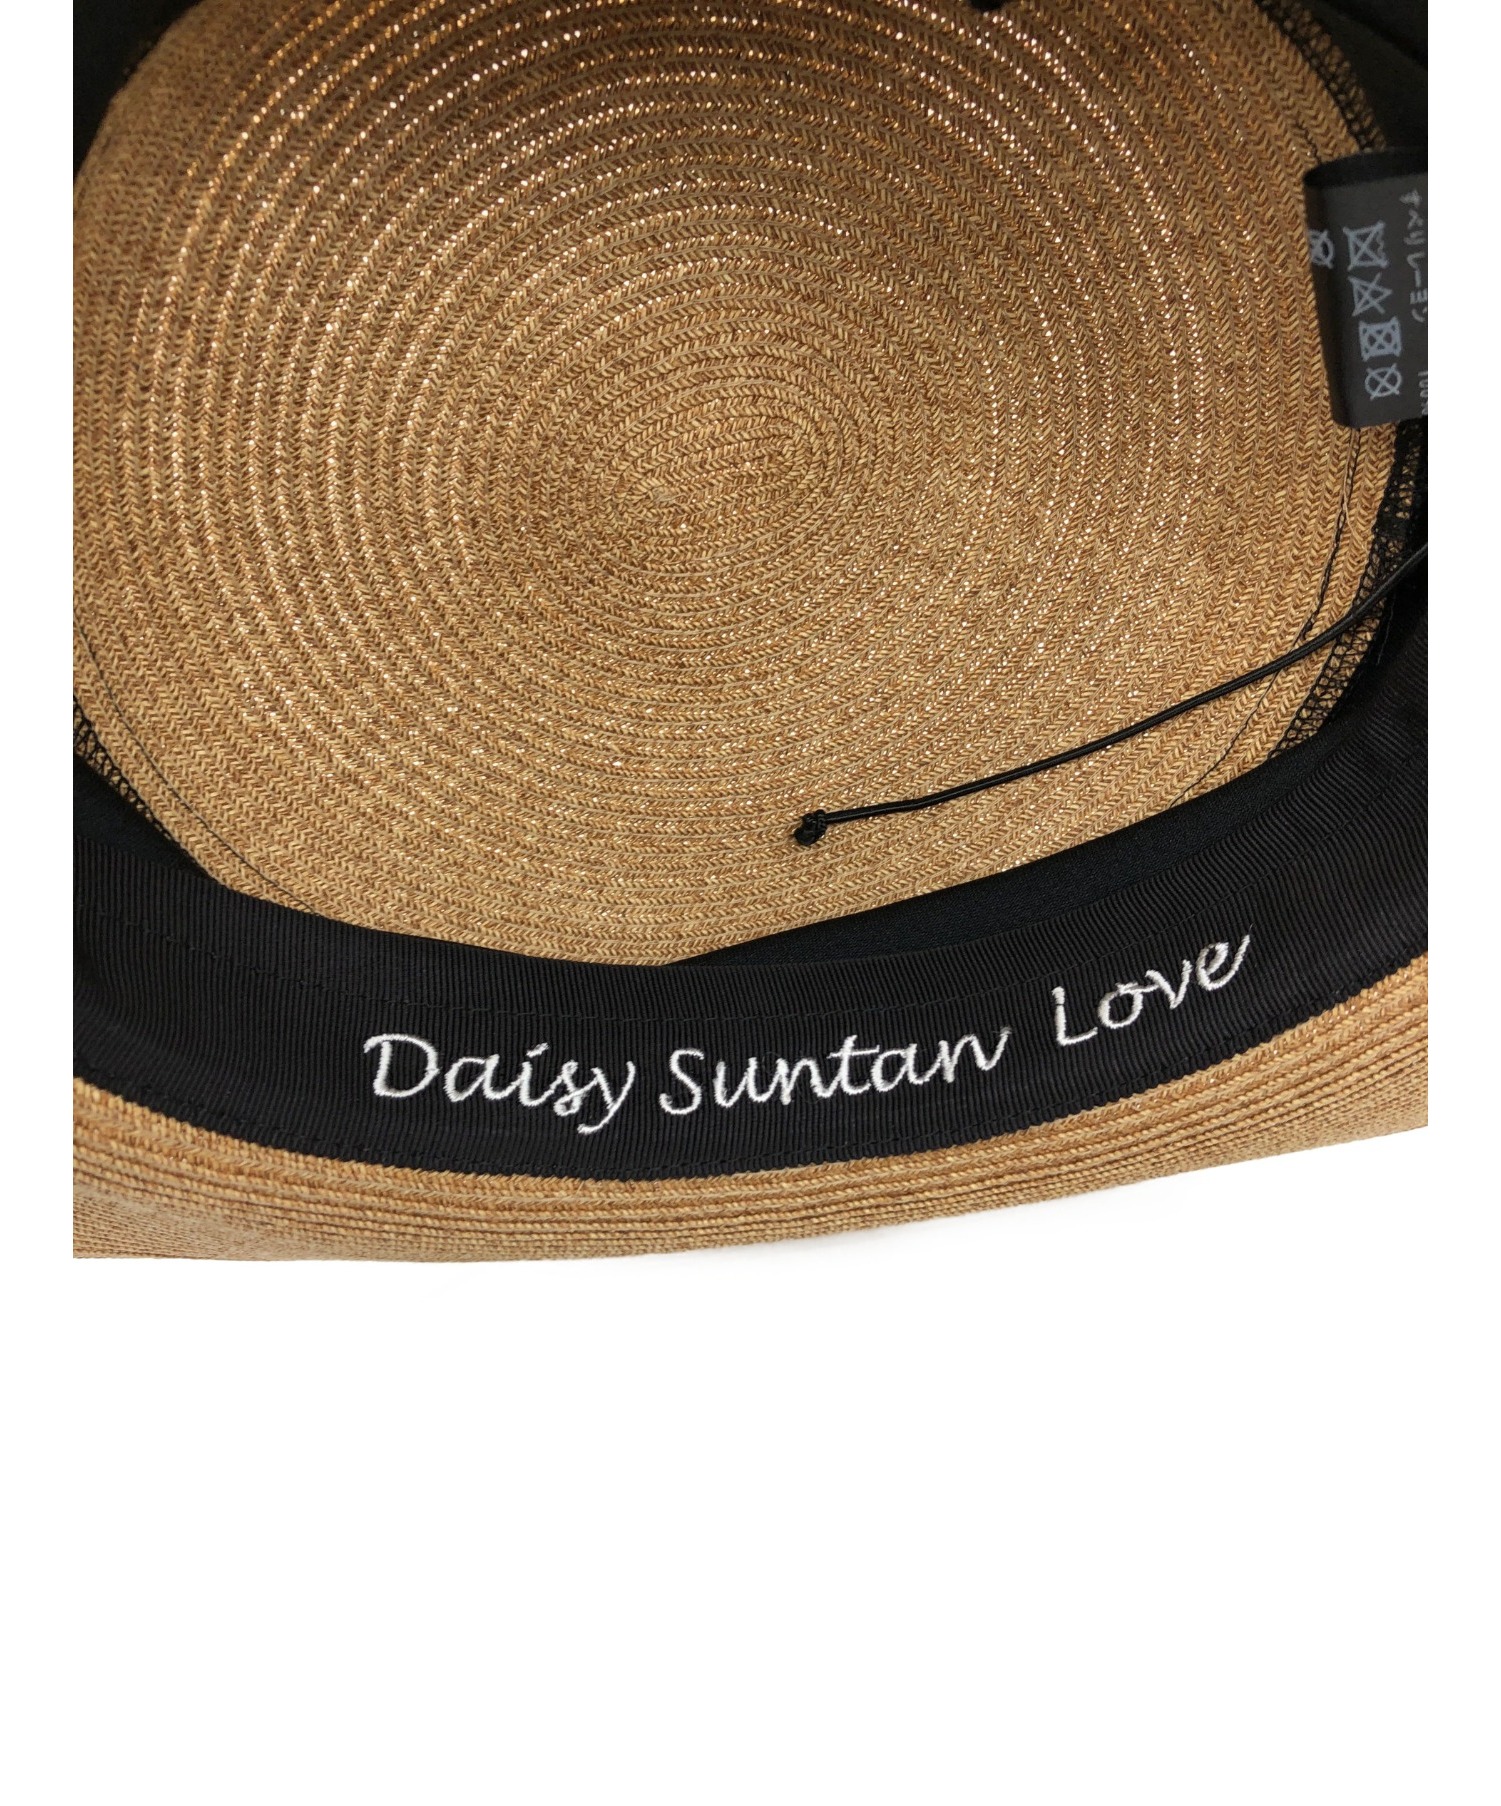 DAISY LIN for FOXEY (デイジーリンフォクシー) Daisy Suntan Love ハット サイズ:-